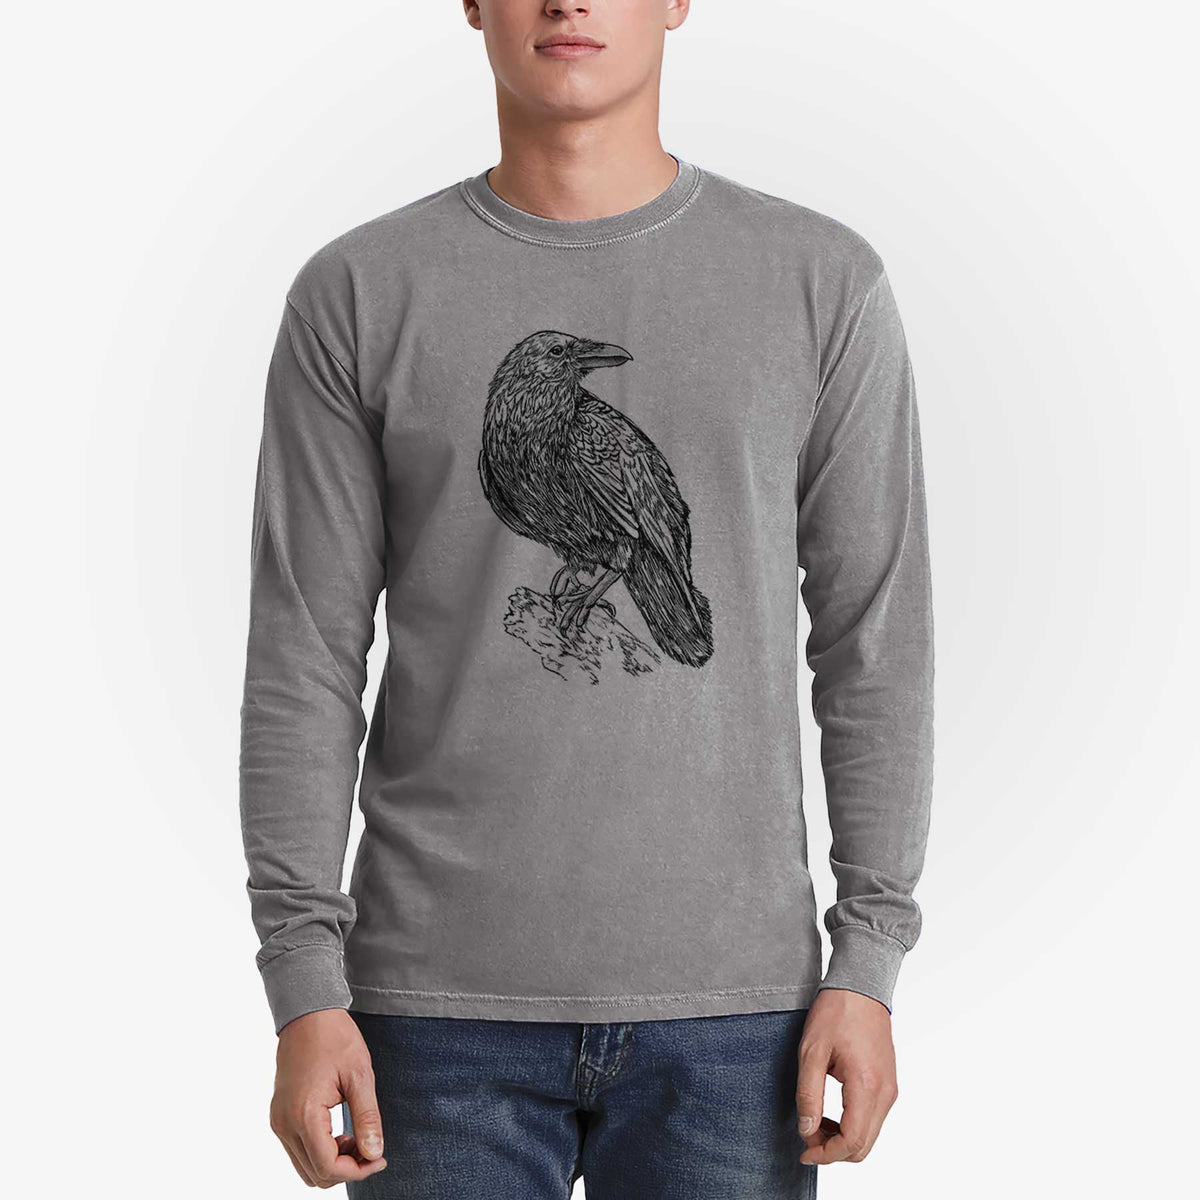 Corvus corax - Common Raven - Heavyweight 100% Cotton Long Sleeve